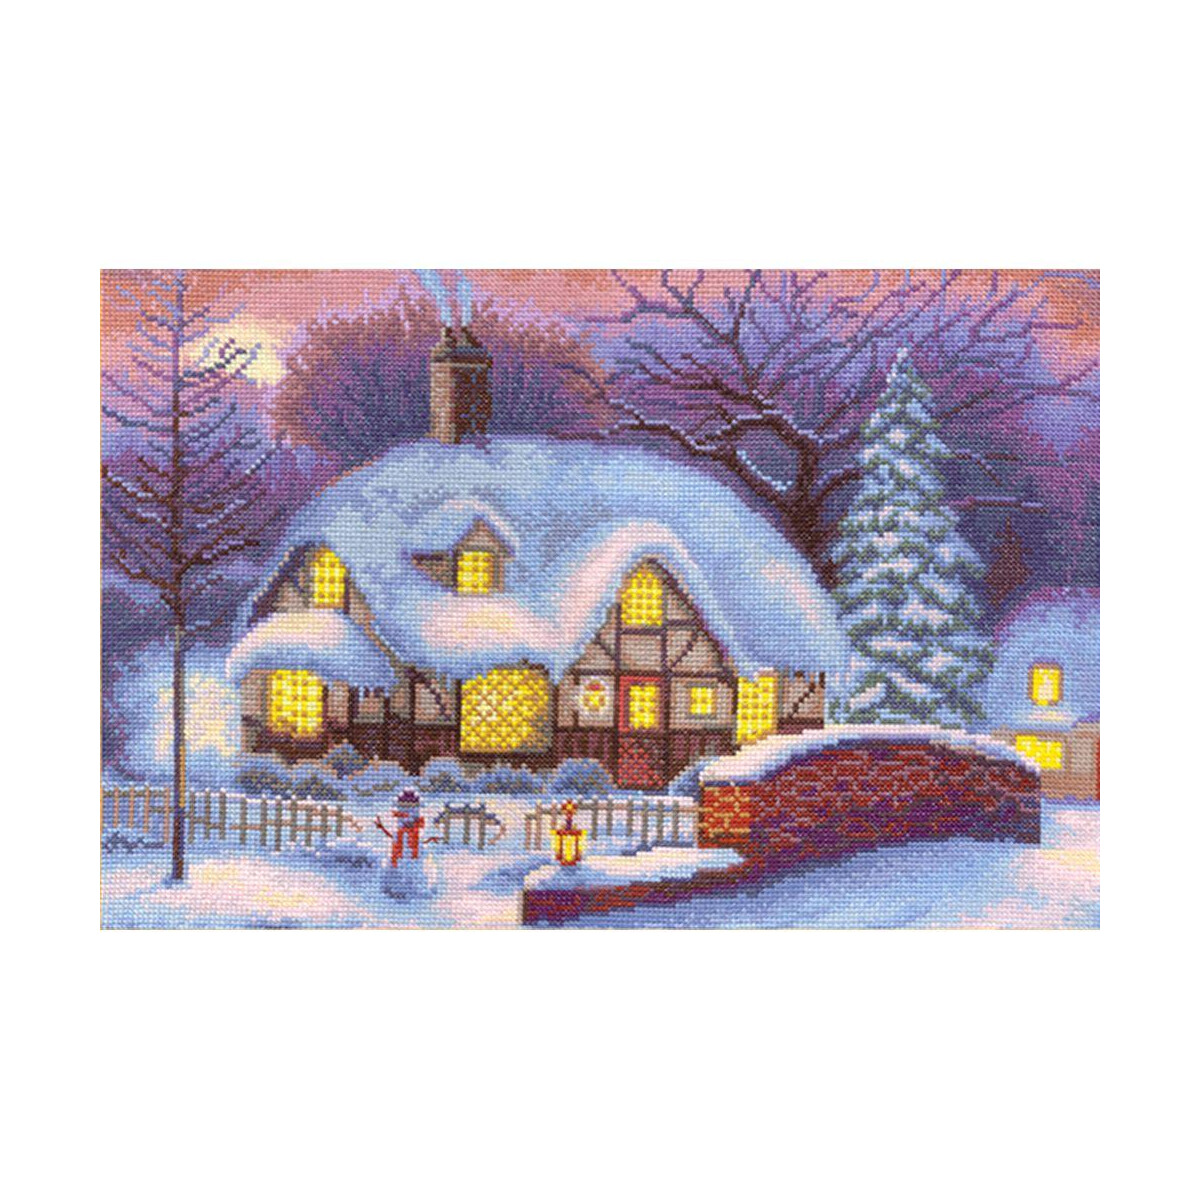 Panna counted cross stitch kit "Winter Cottage"...